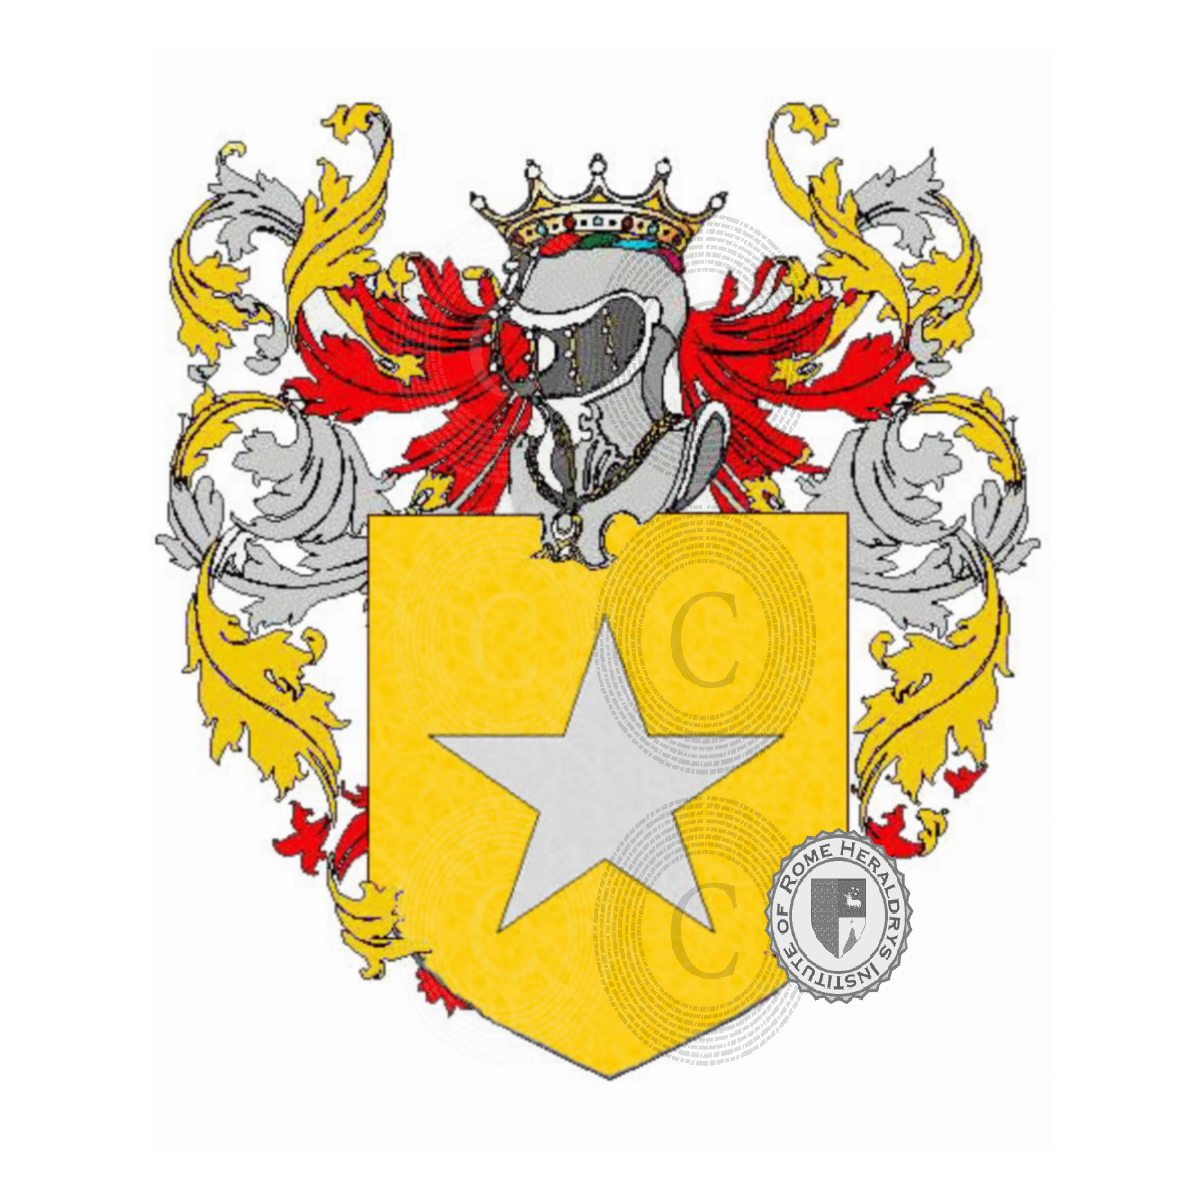 Wappen der Familiepastorino, Castorino